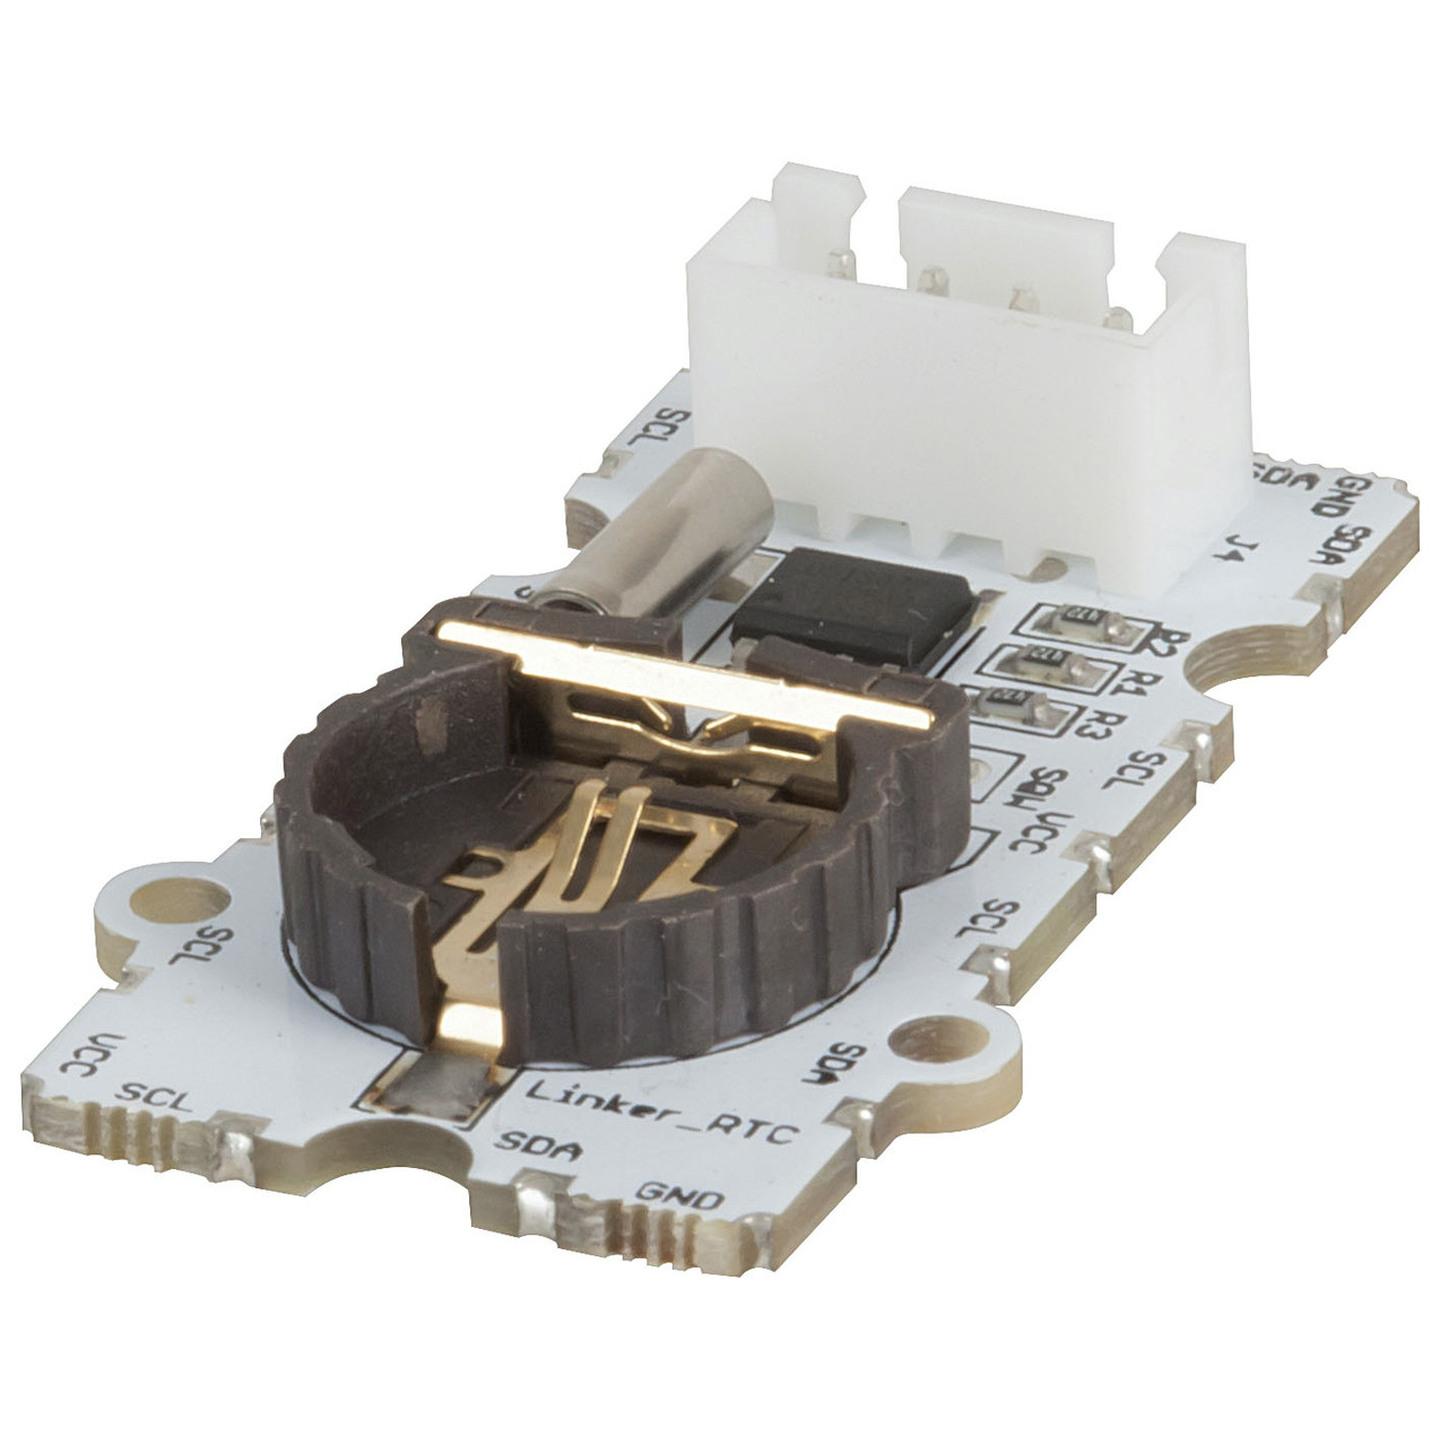 Linker RTC Module for Arduino